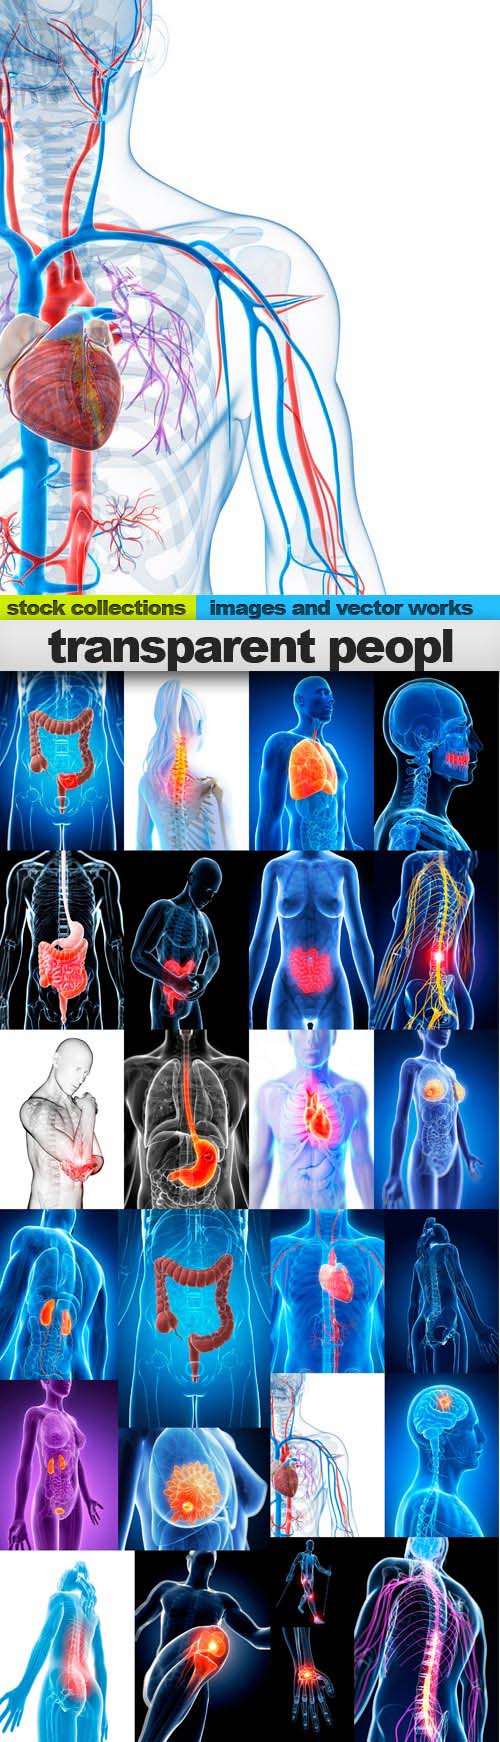 Transparent people,25 x UHQ JPEG